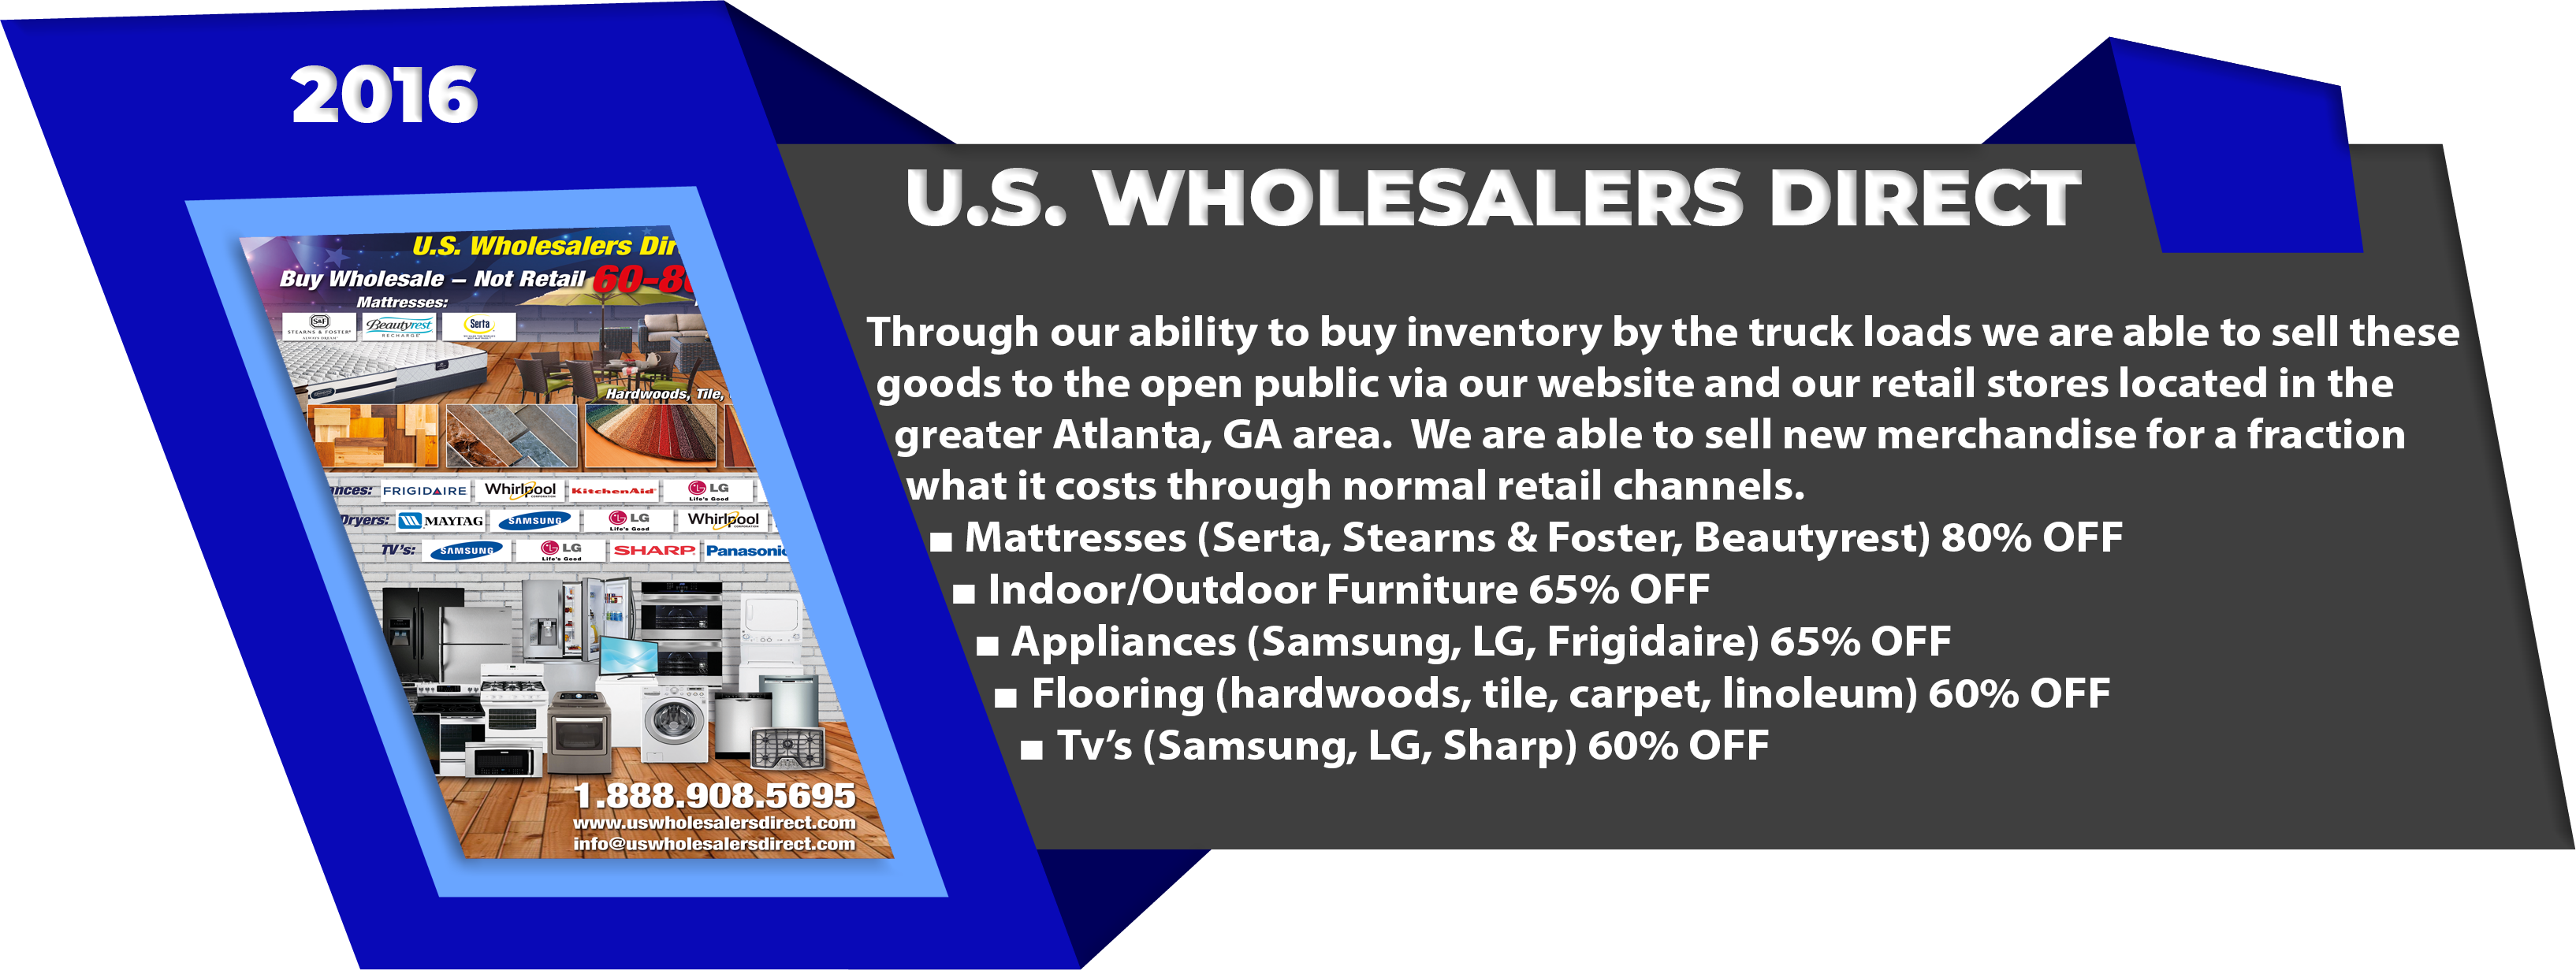 U.S. Wholesalers Direct 2016